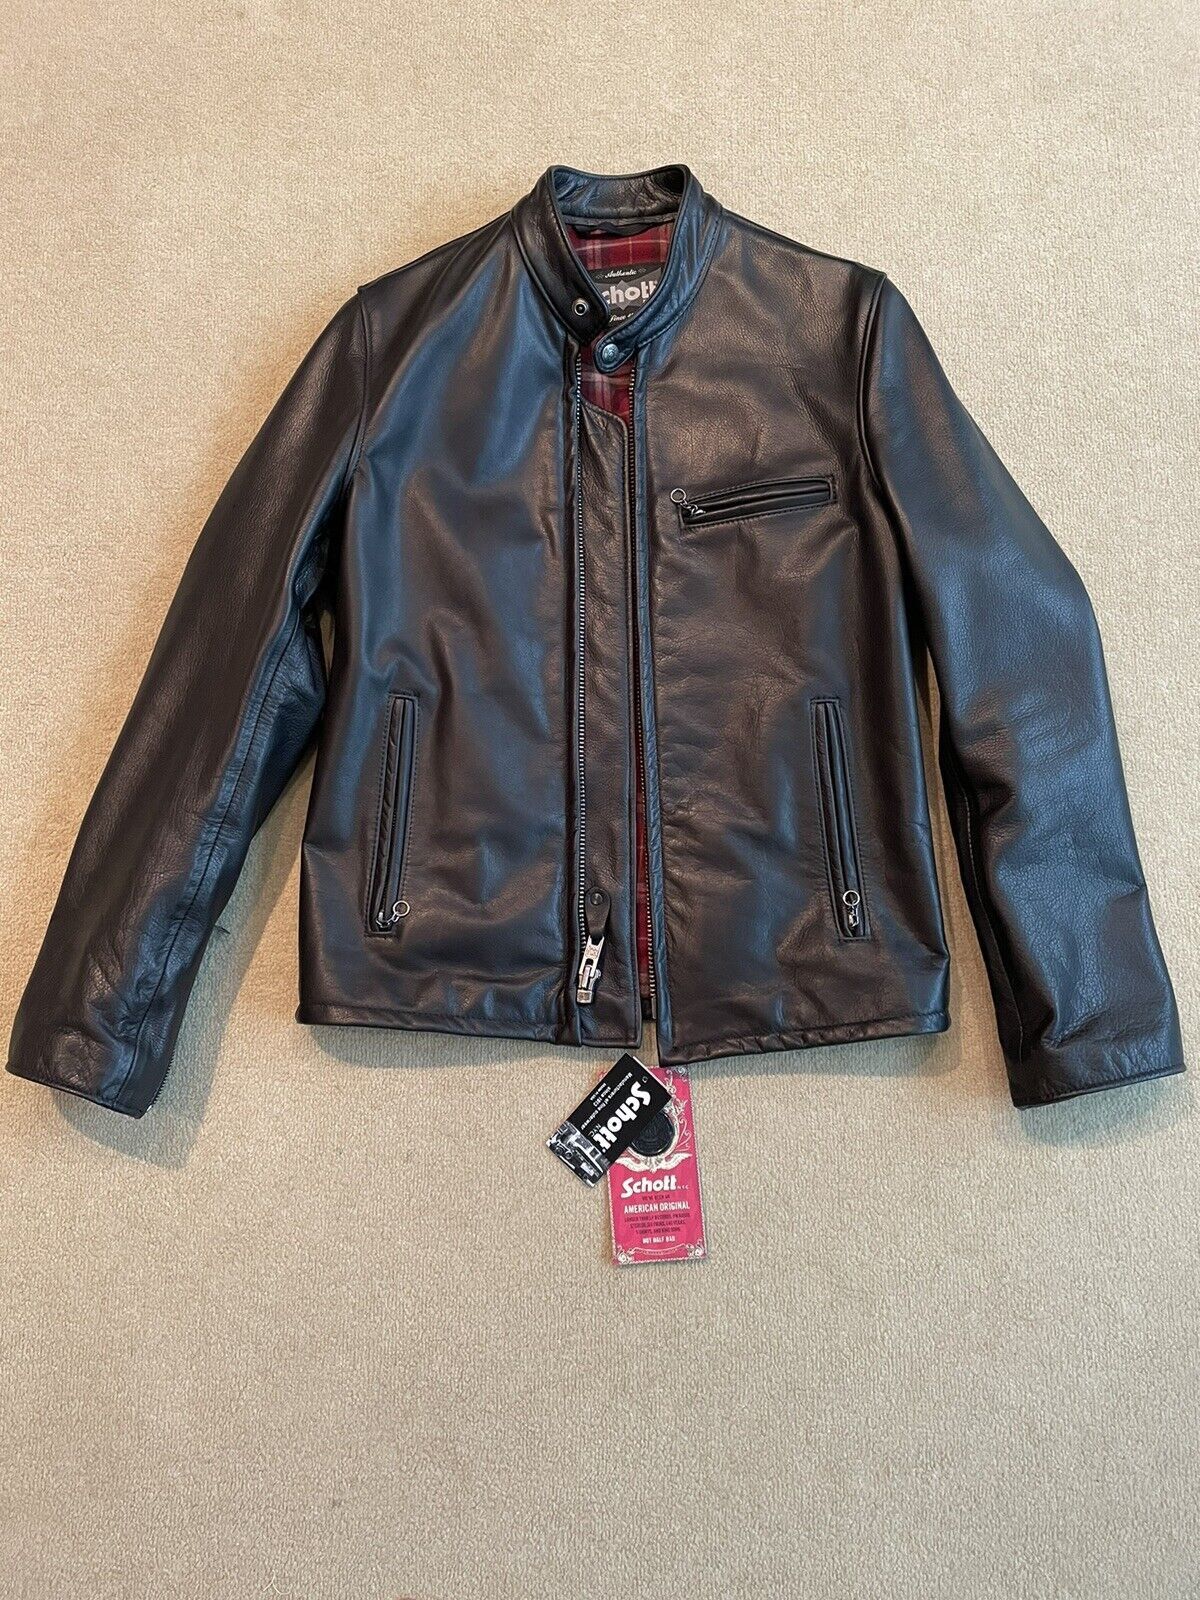 Schott 530 Cafe Racer Leather Jacket | Grailed